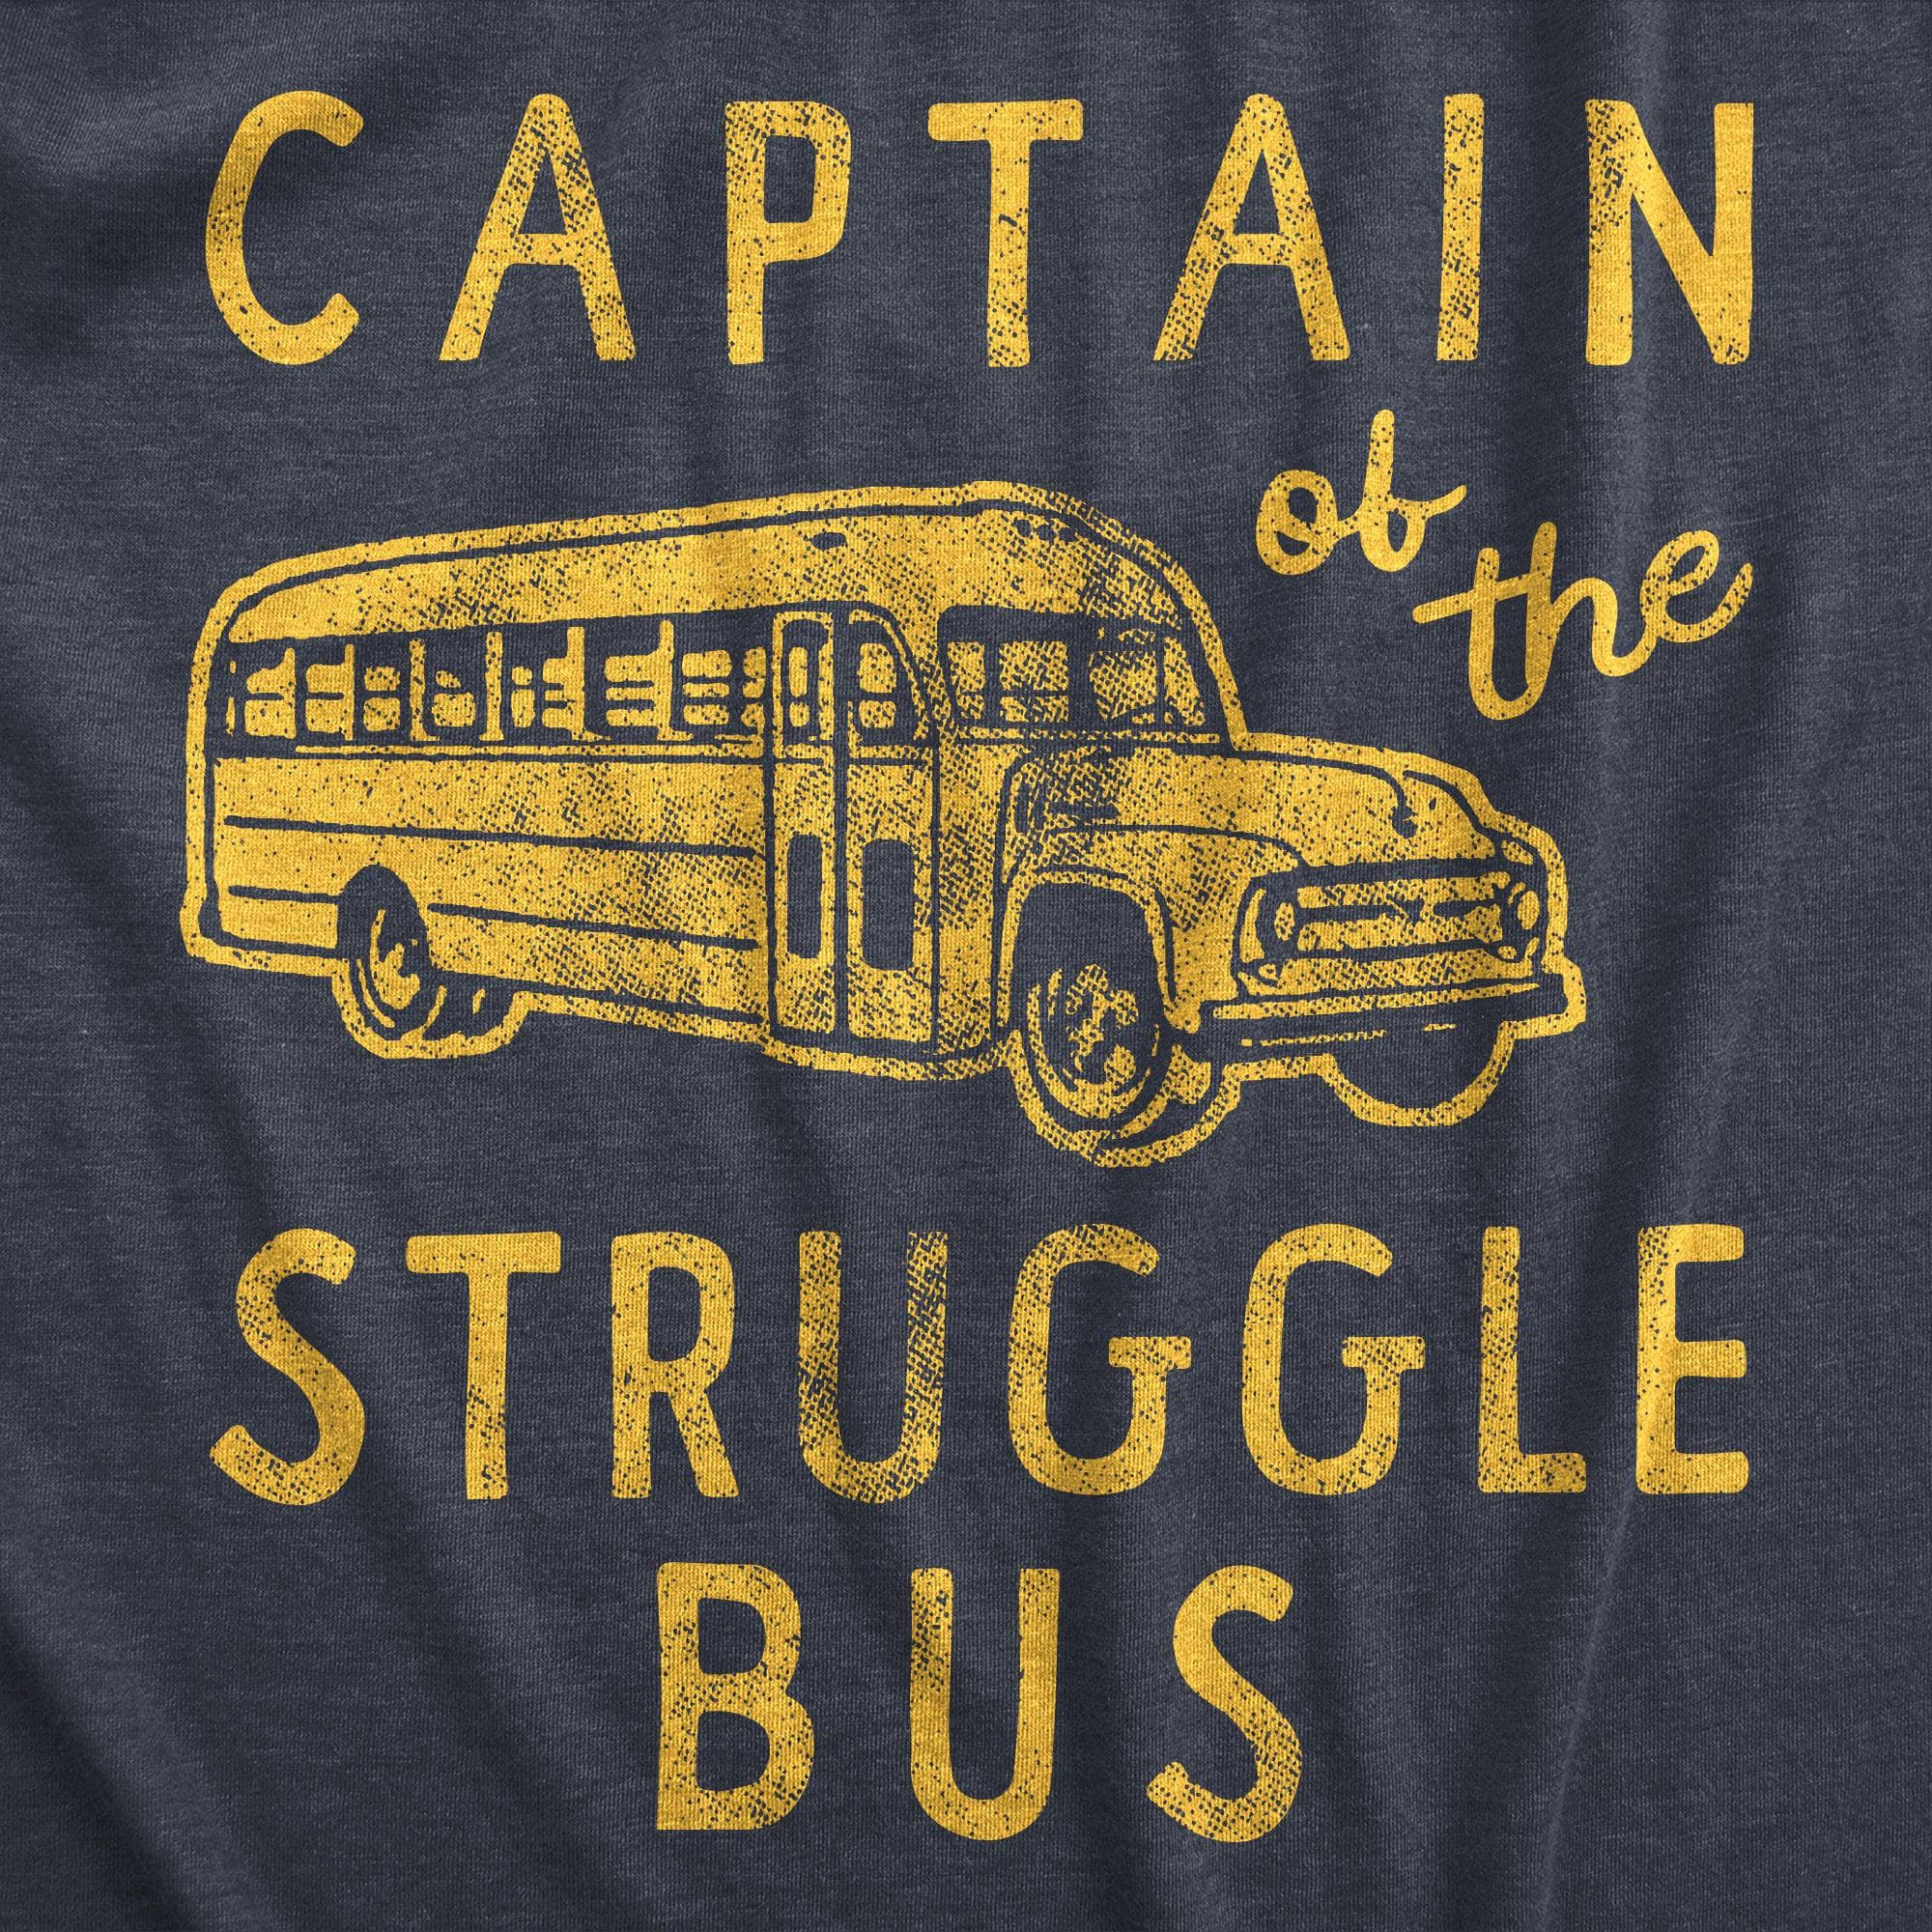 Captain Of The Struggle Bus Women's Tshirt  -  Crazy Dog T-Shirts